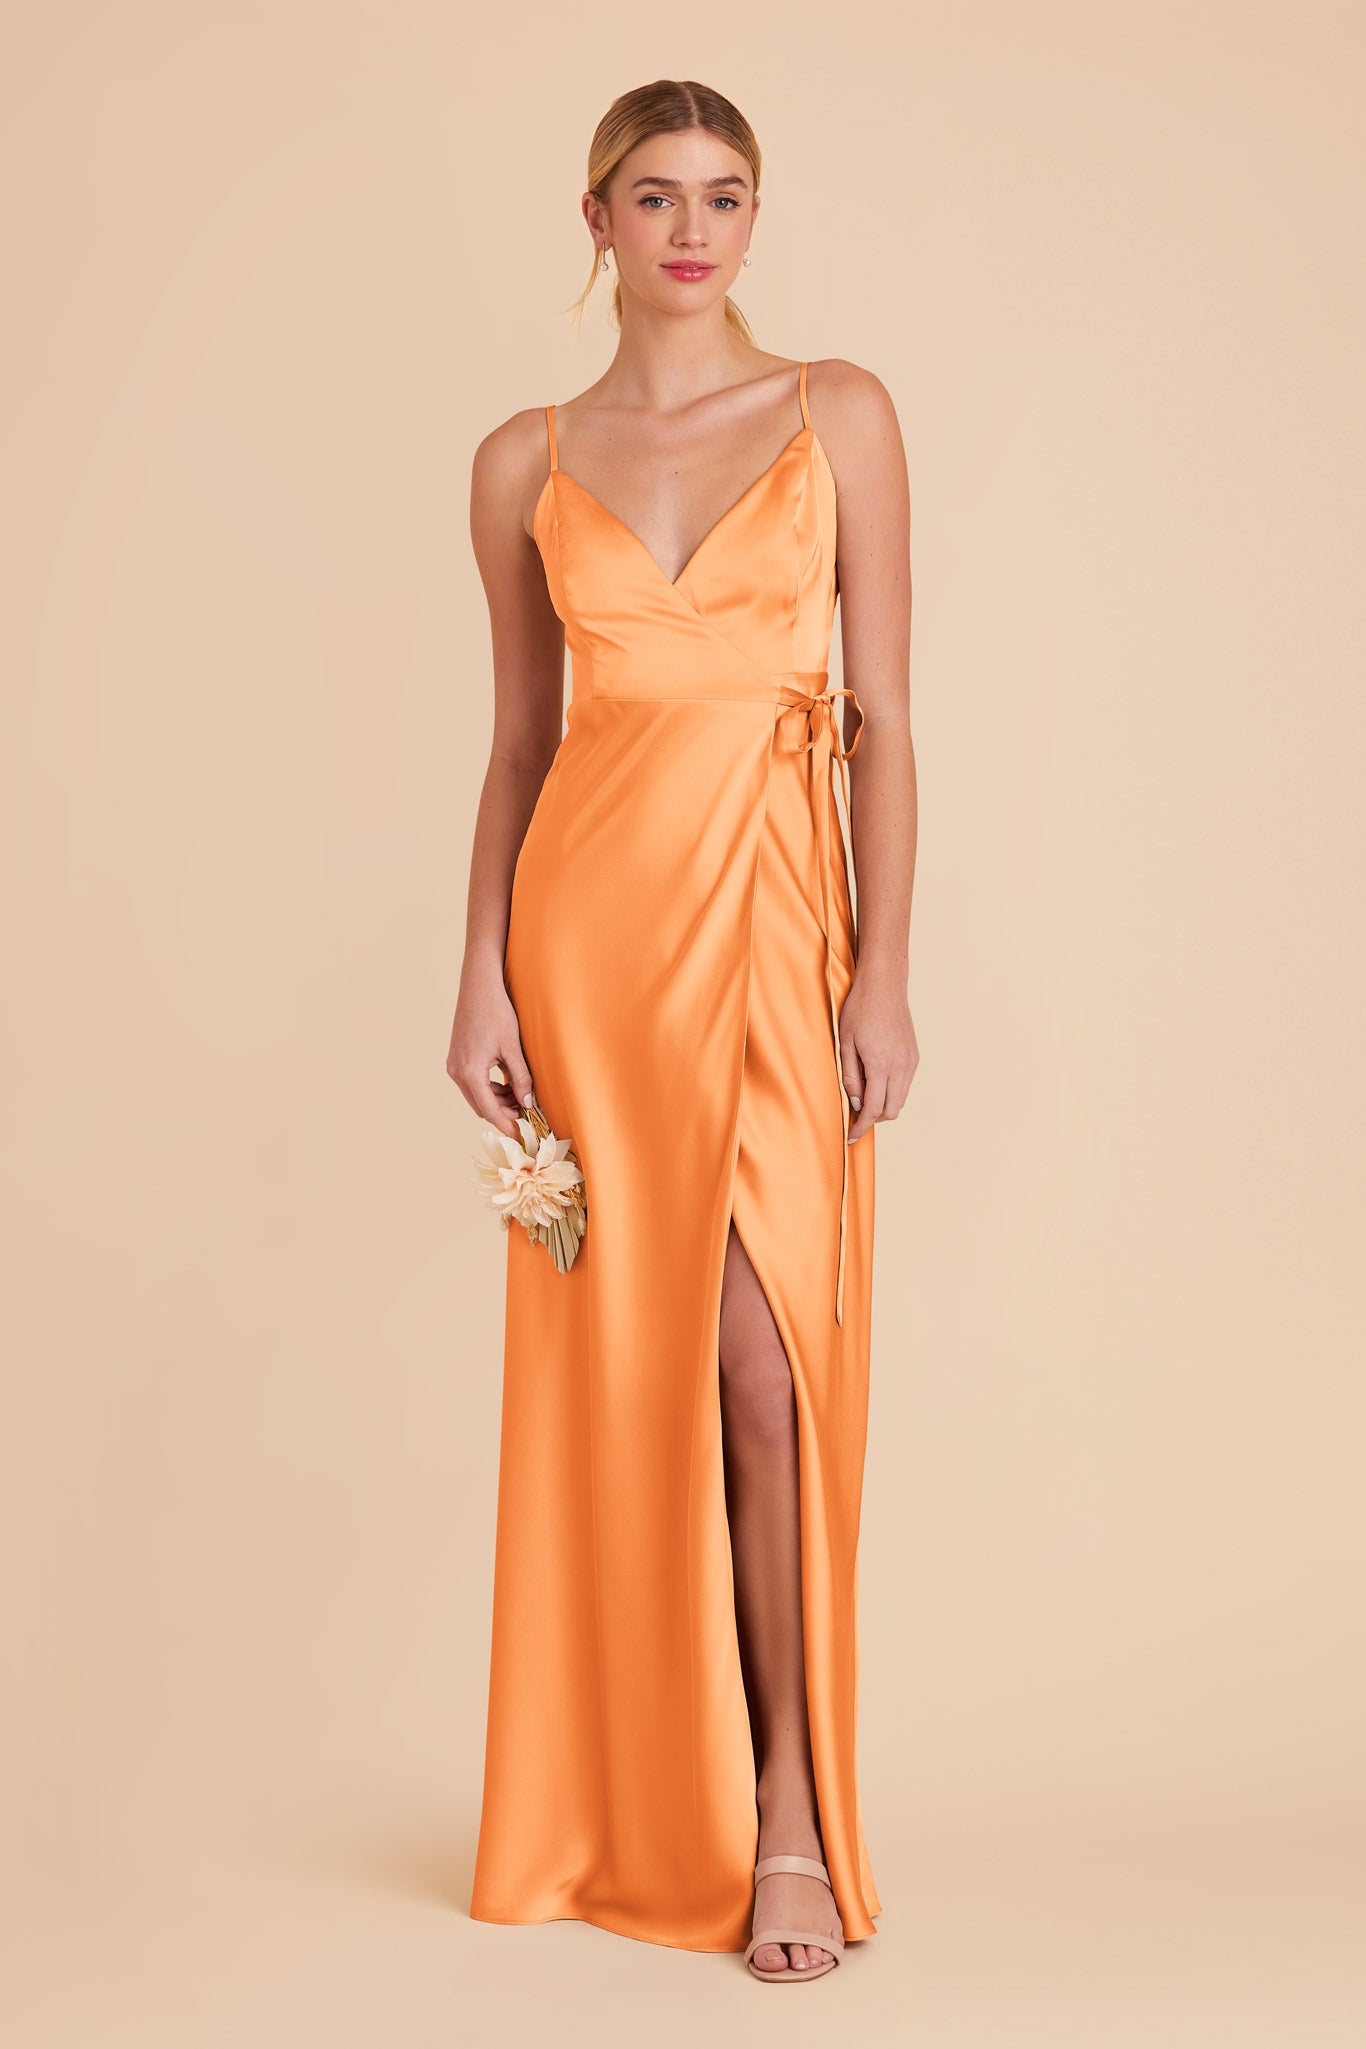 Apricot Cindy Matte Satin Dress by Birdy Grey